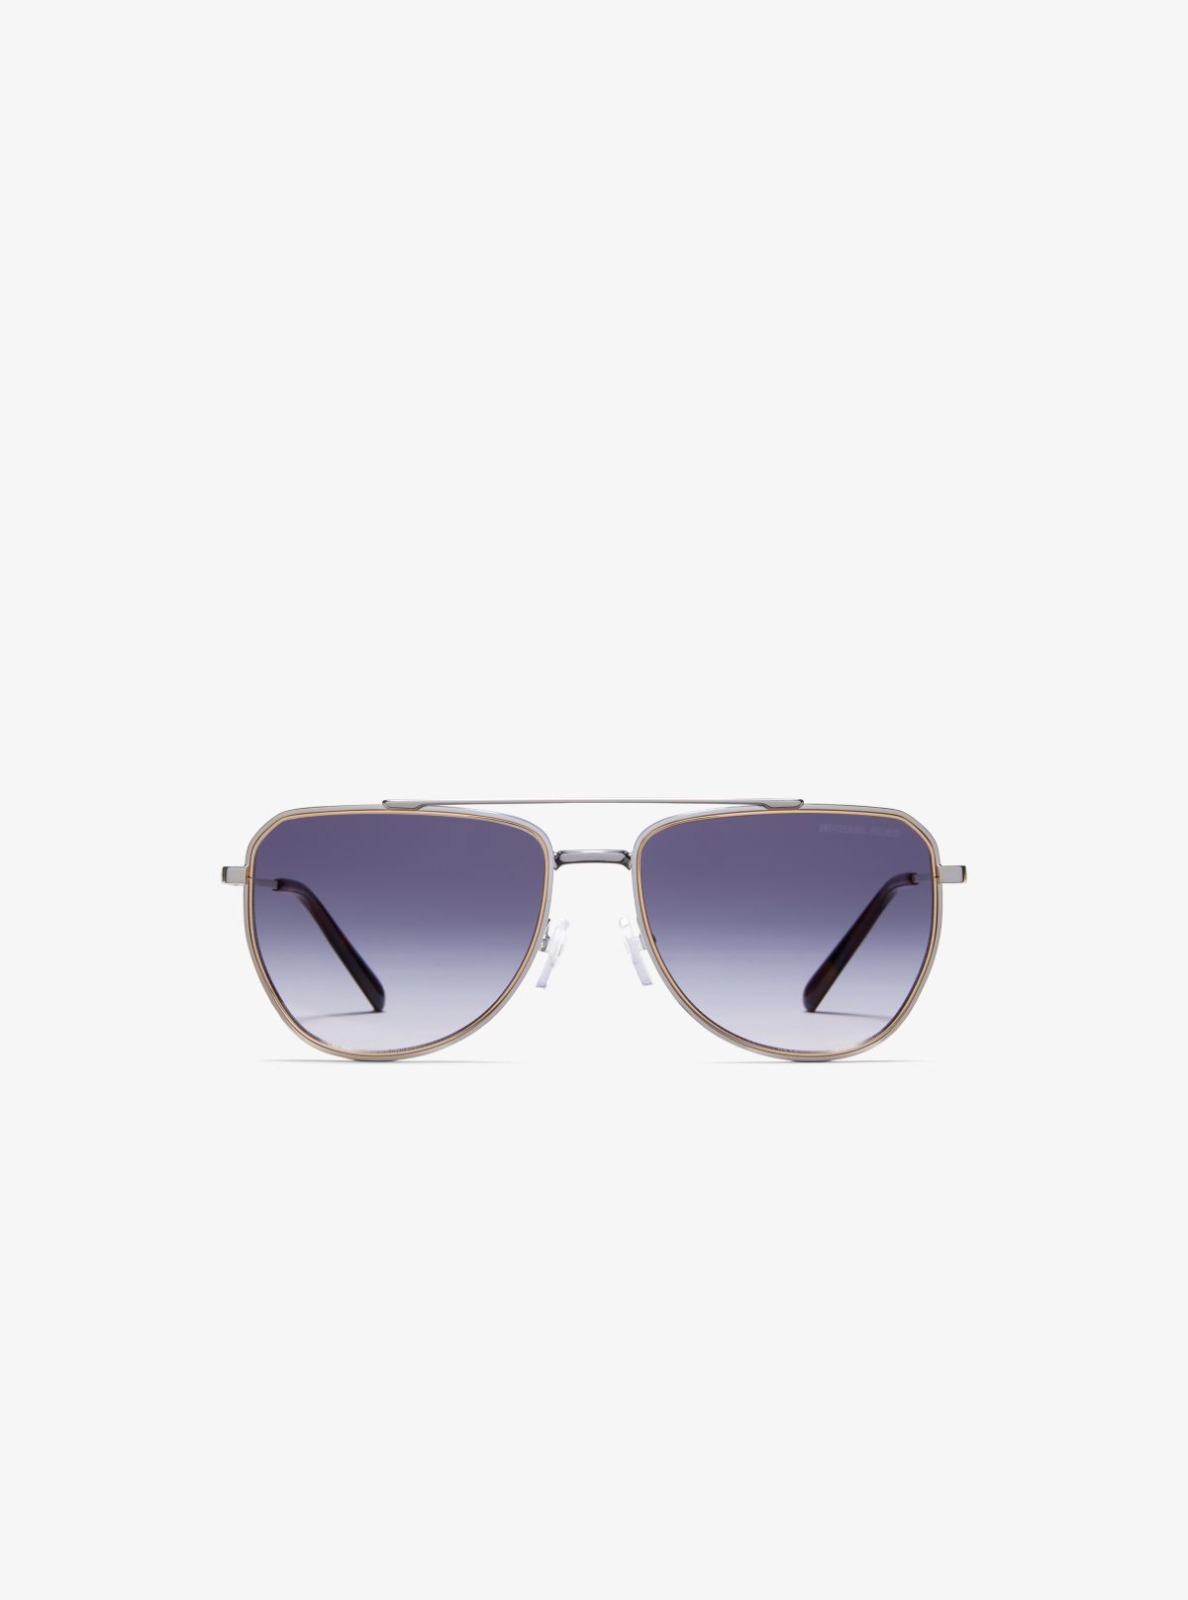 Silver Sunglasses from Michael Kors GOOFASH